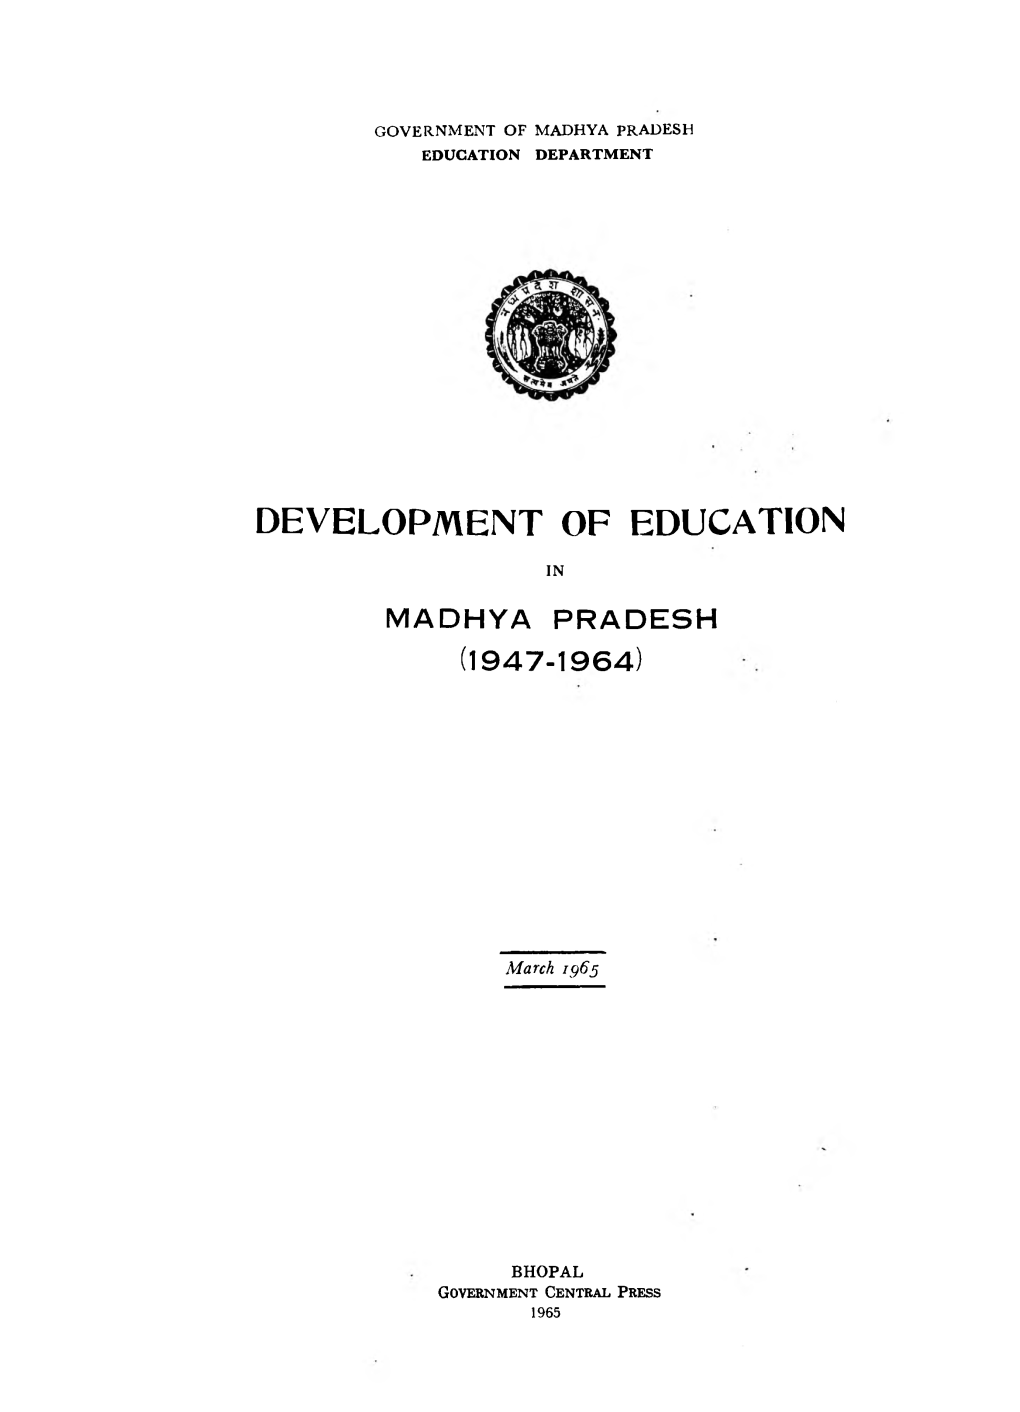 Development of Education